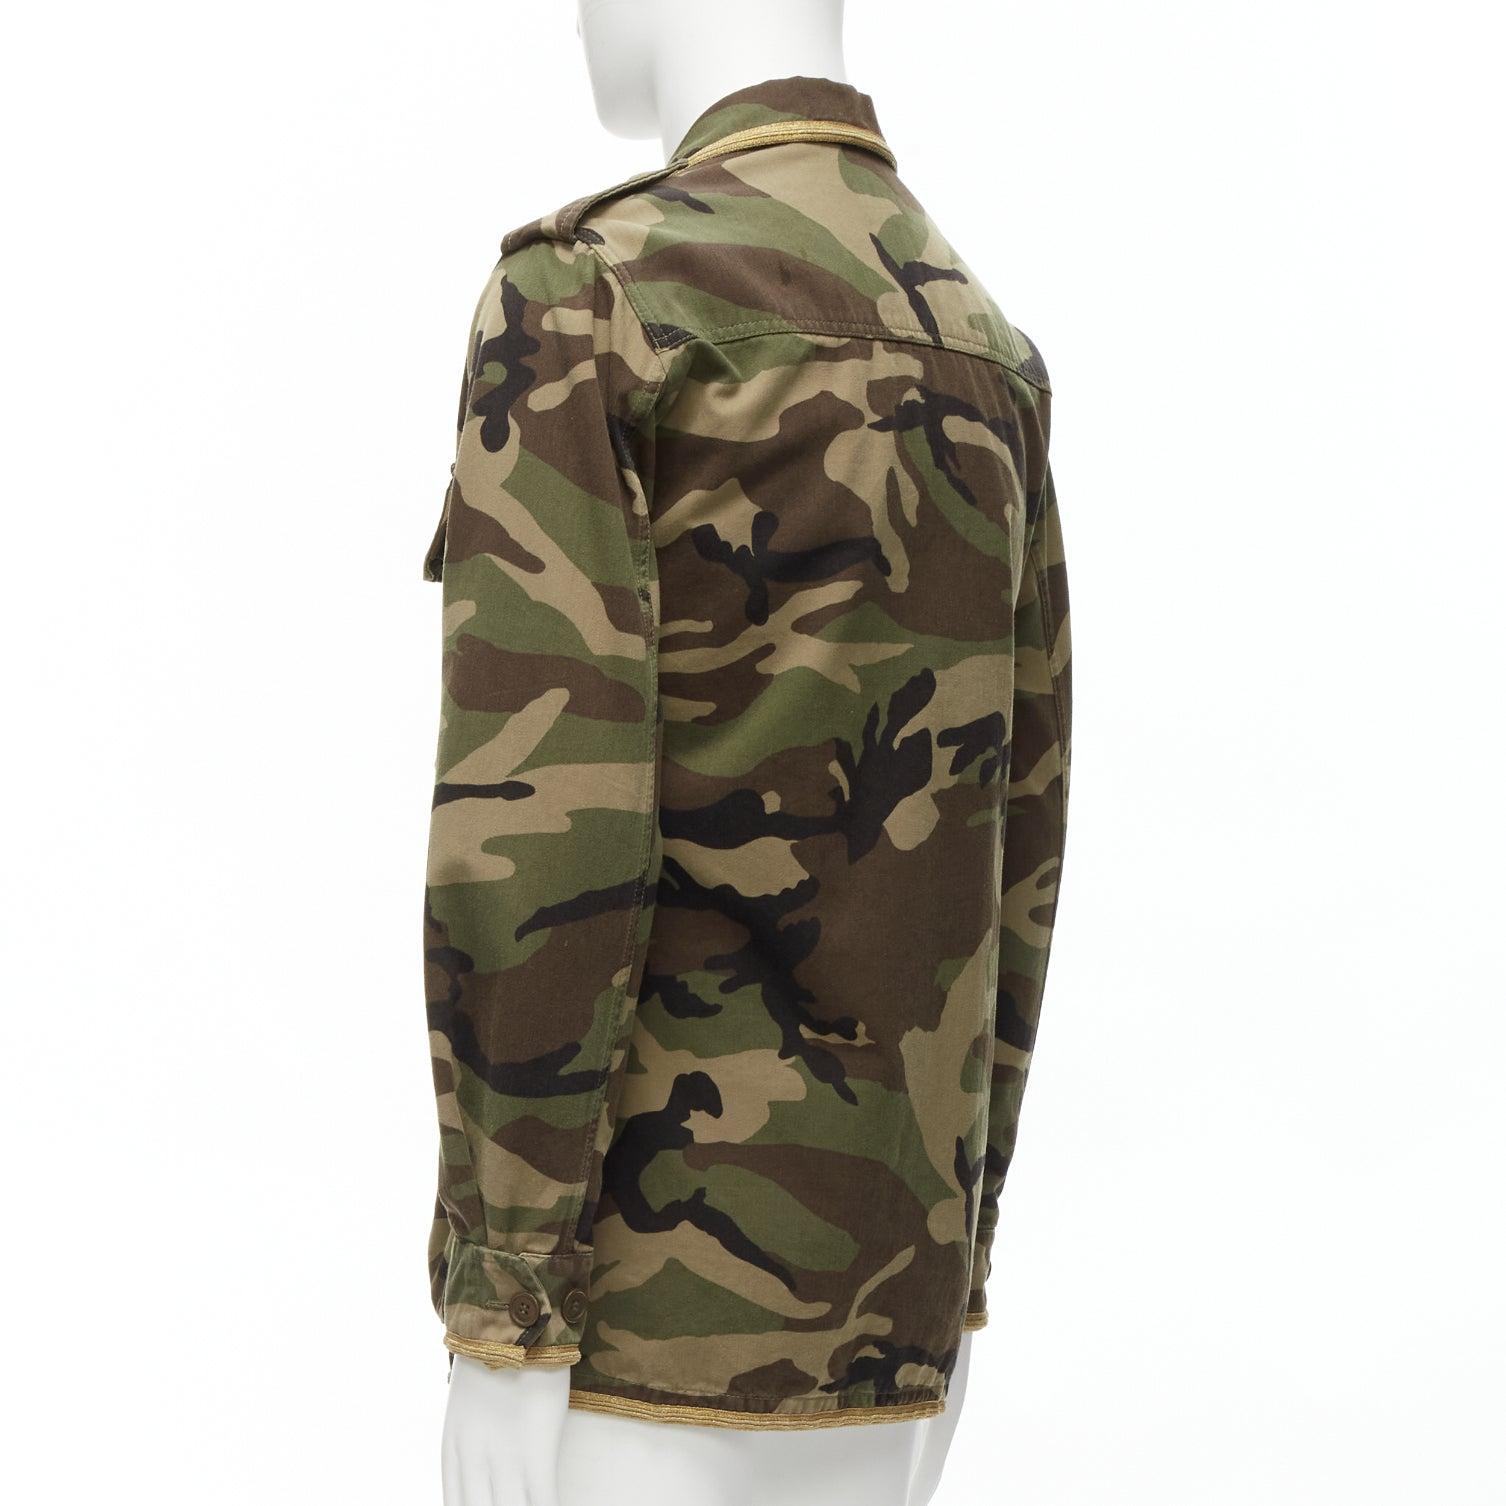 SAINT LAURENT Hedi Slimane 2014 trim camouflage military cargo jacket FR46 S For Sale 2